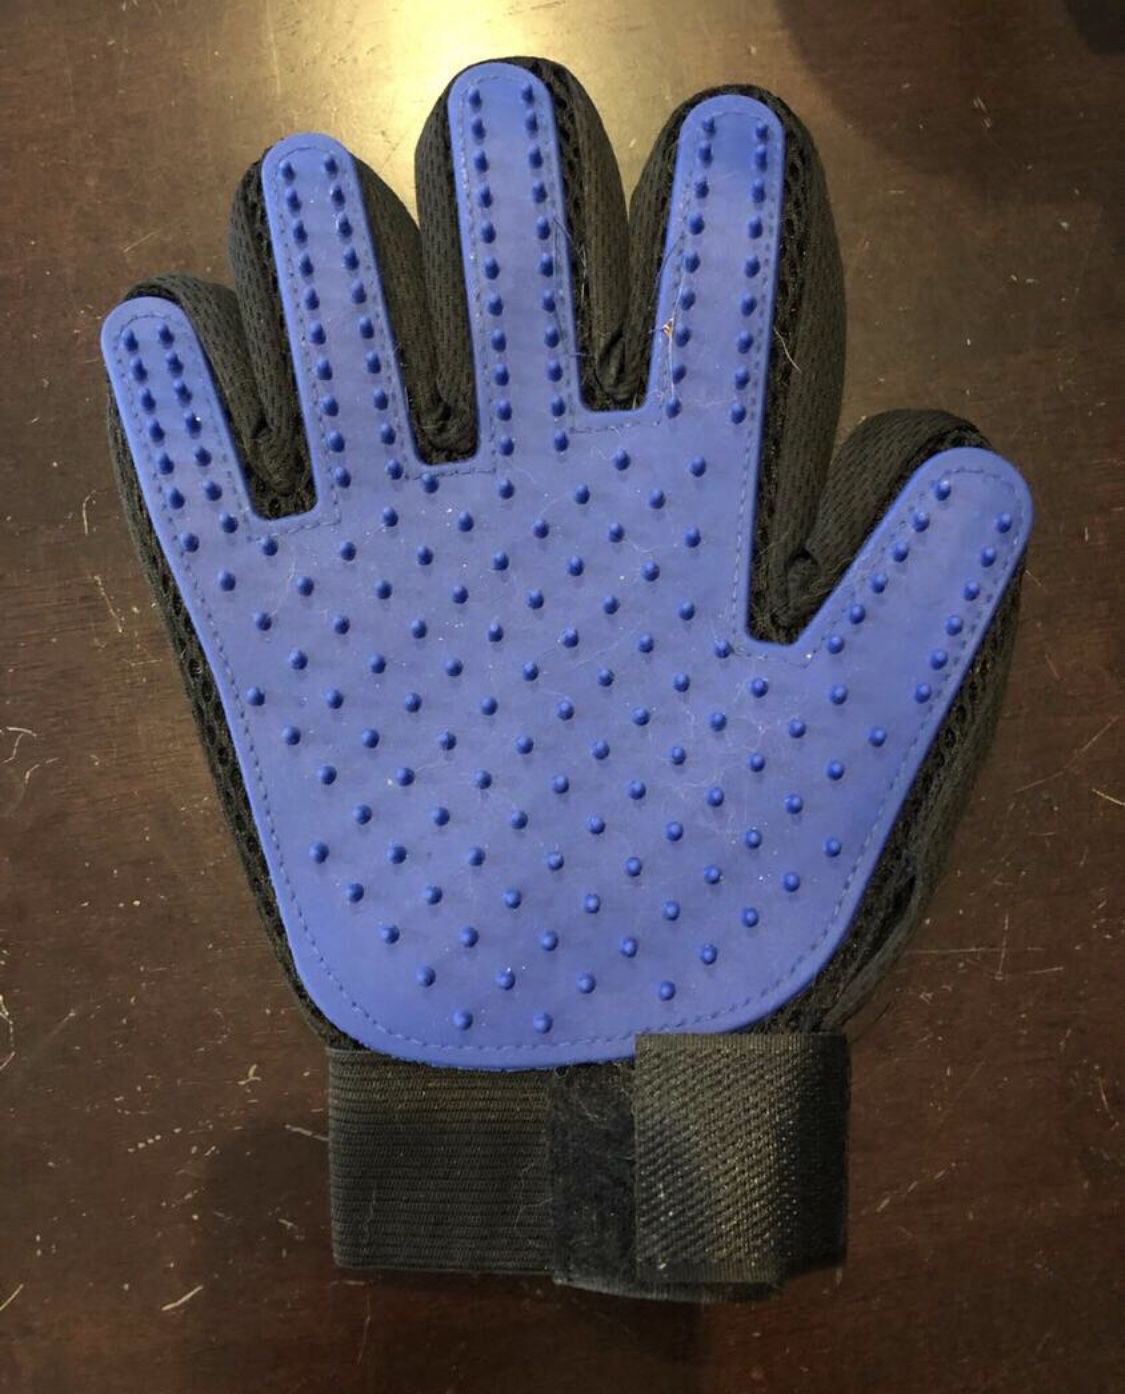 Pet Deshedding Glove